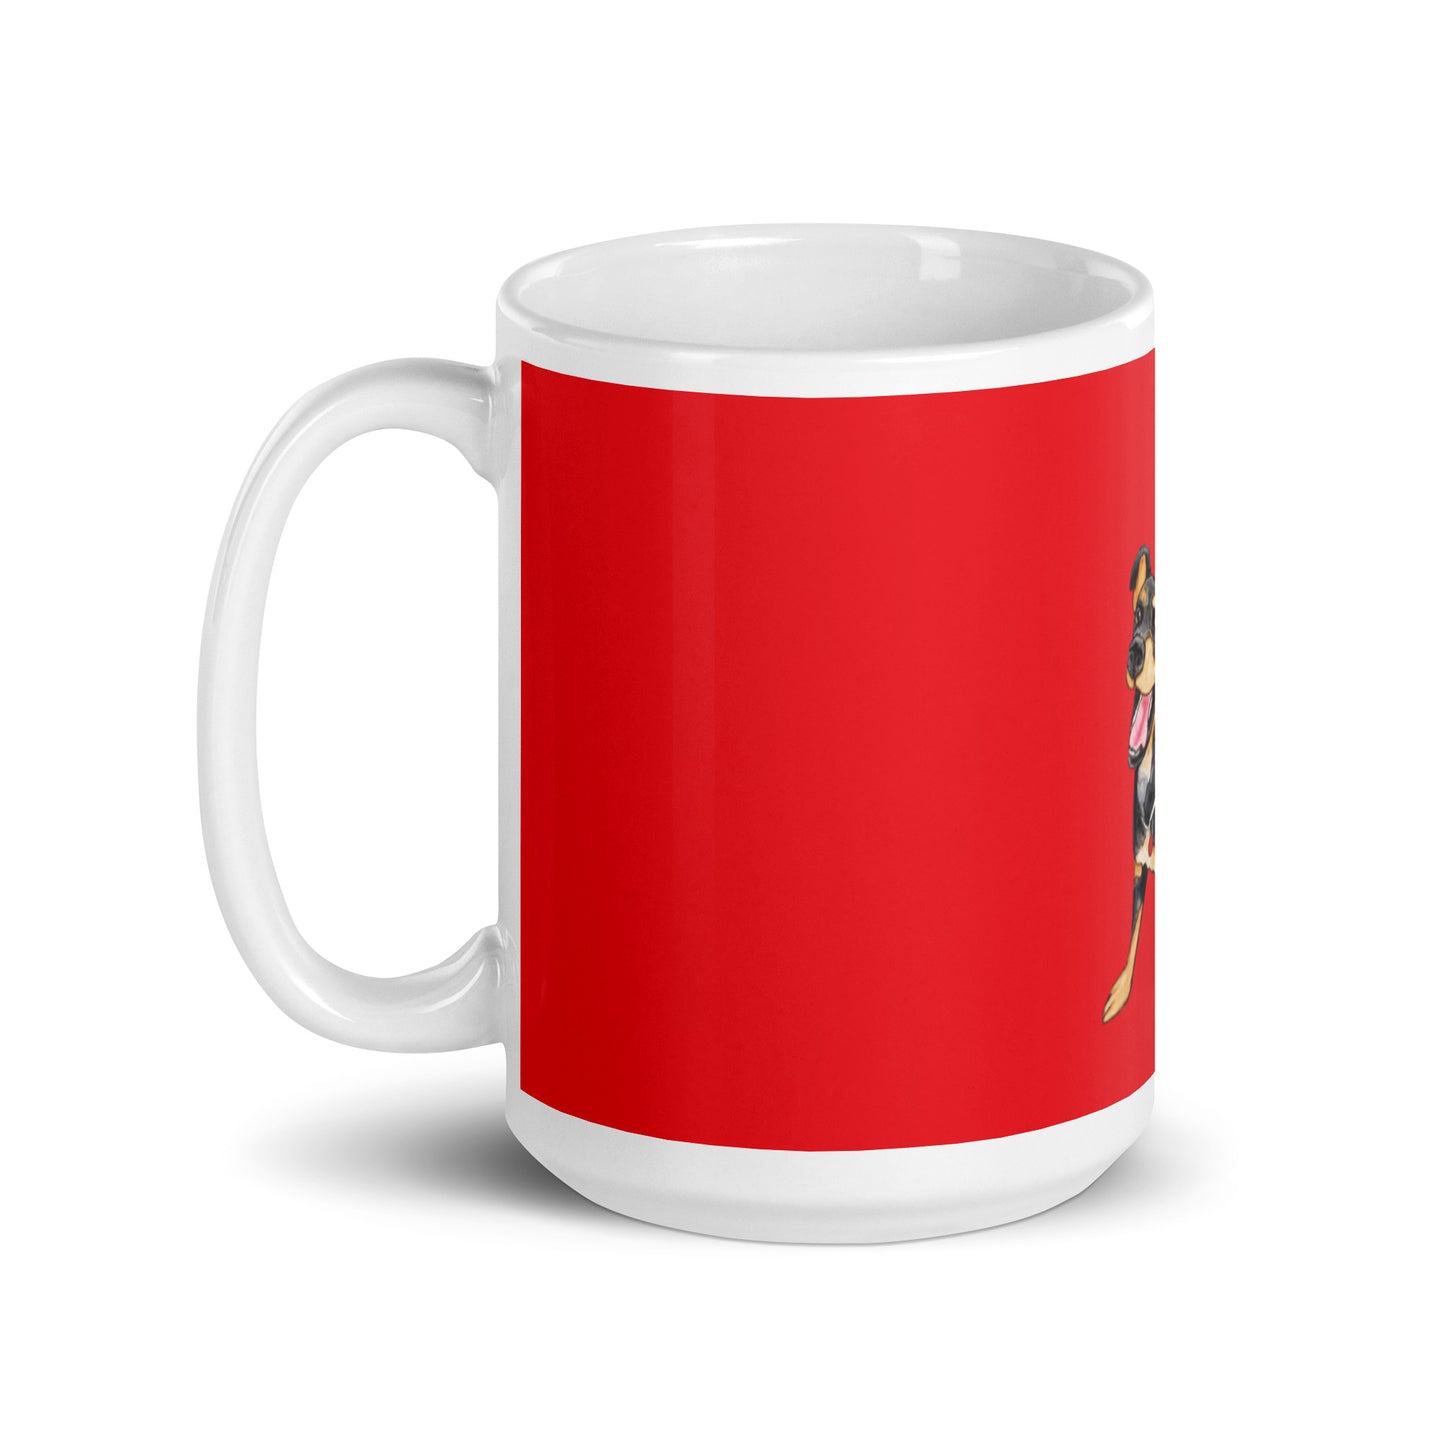 Happy Dog red glossy mug